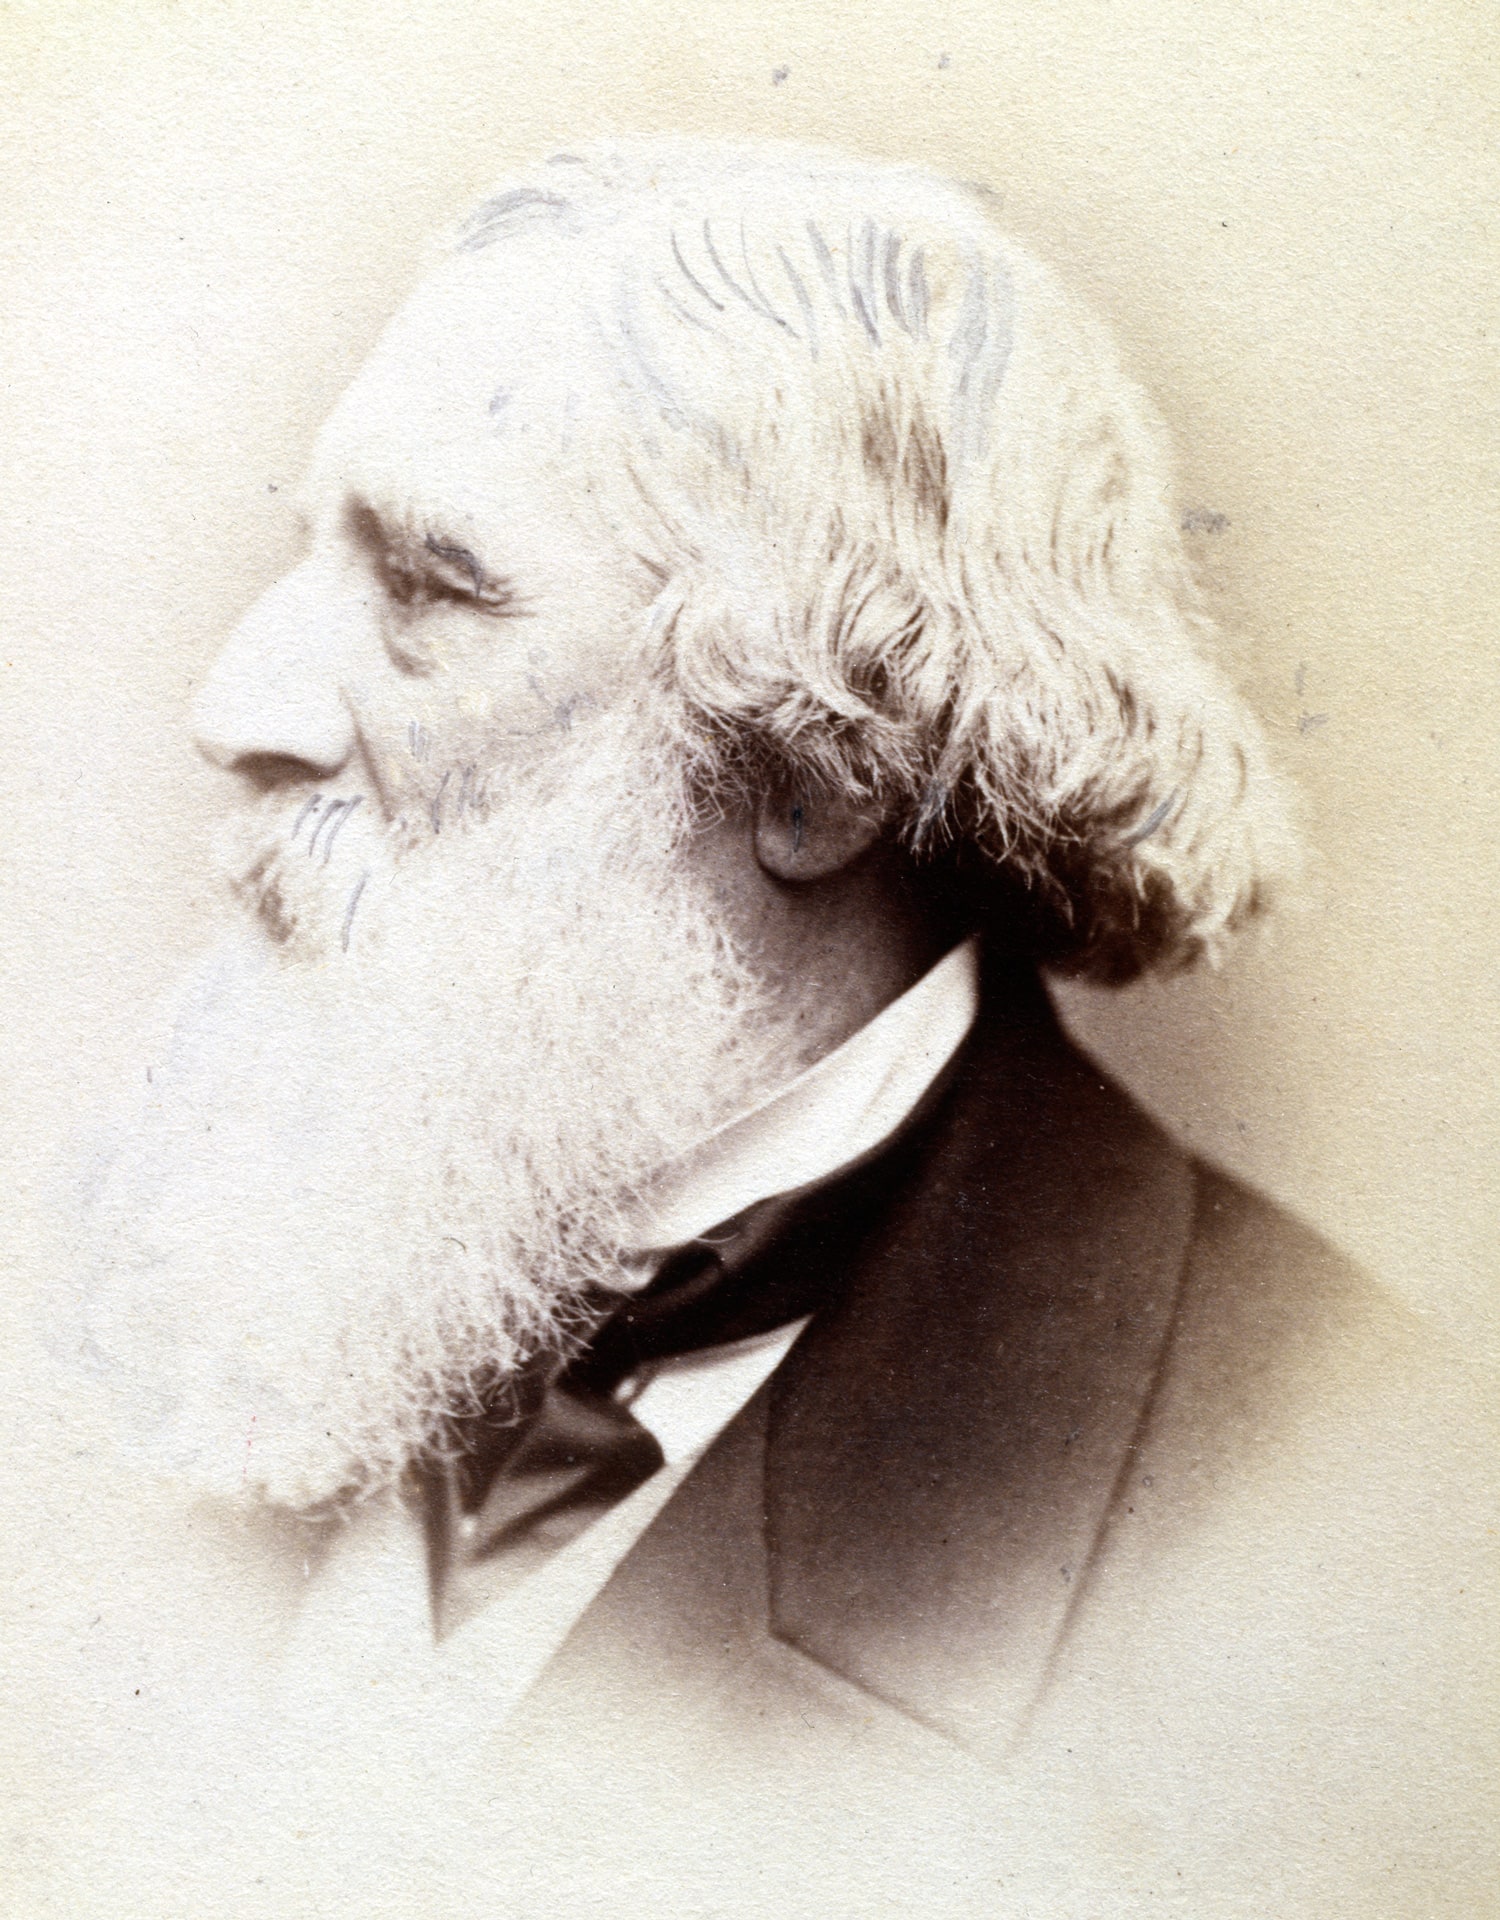 John Frederick Lewis